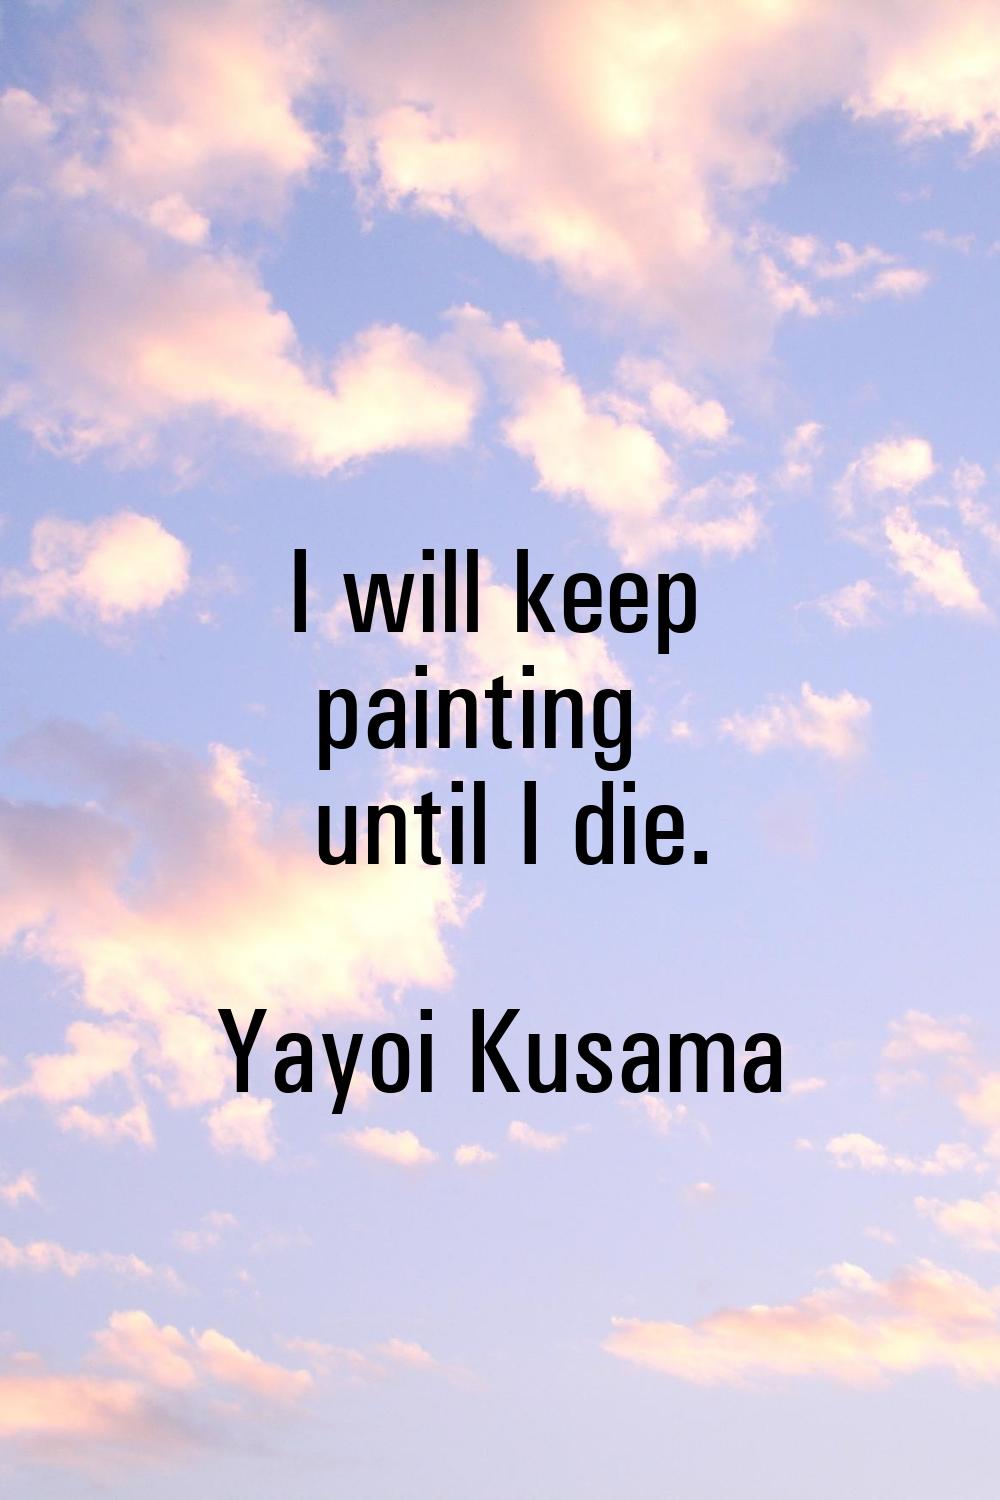 I will keep painting until I die.